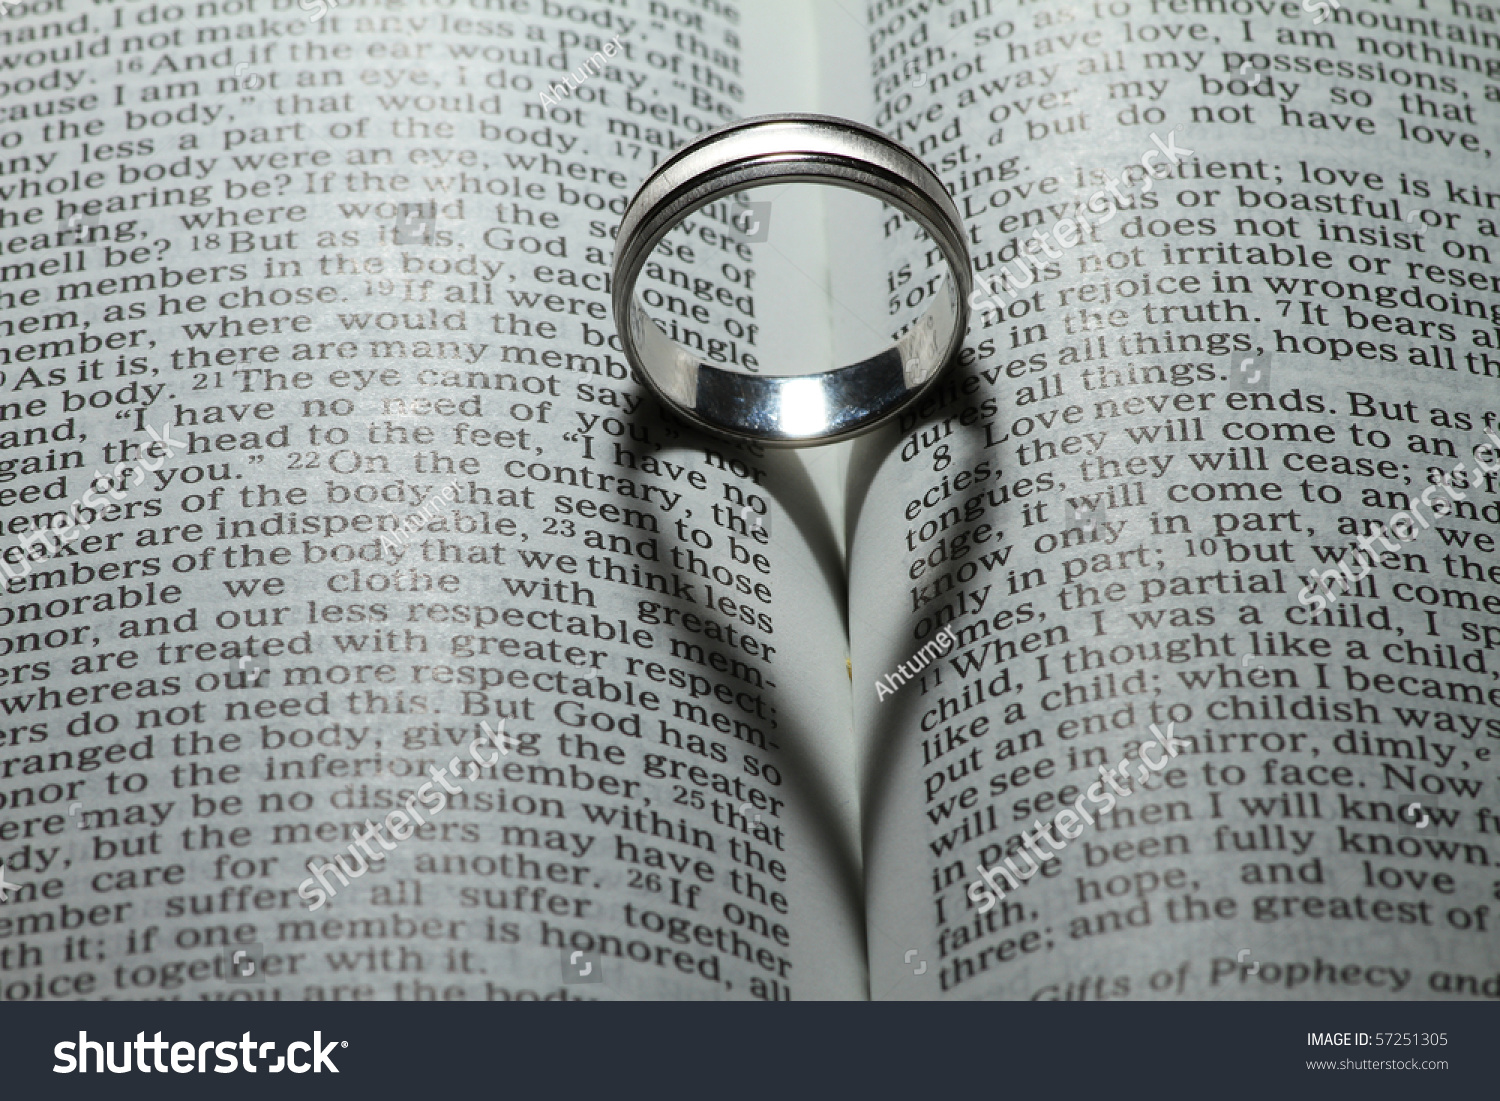 Bible verse for wedding ring